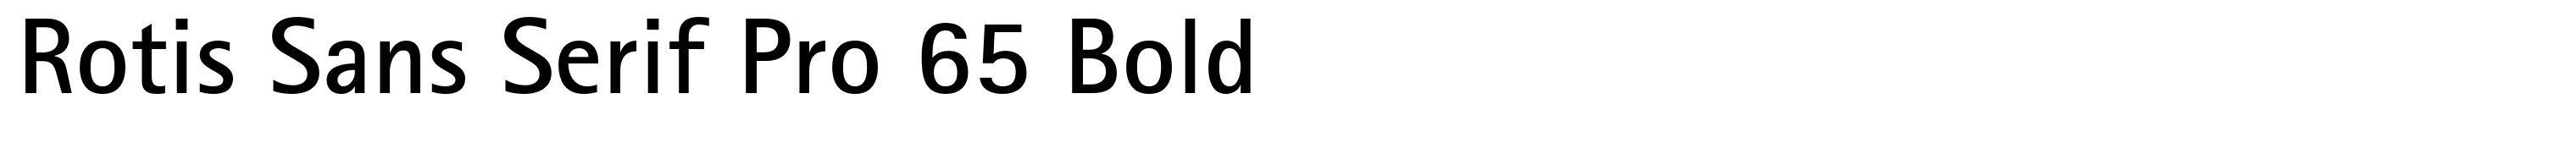 Rotis Sans Serif Pro 65 Bold